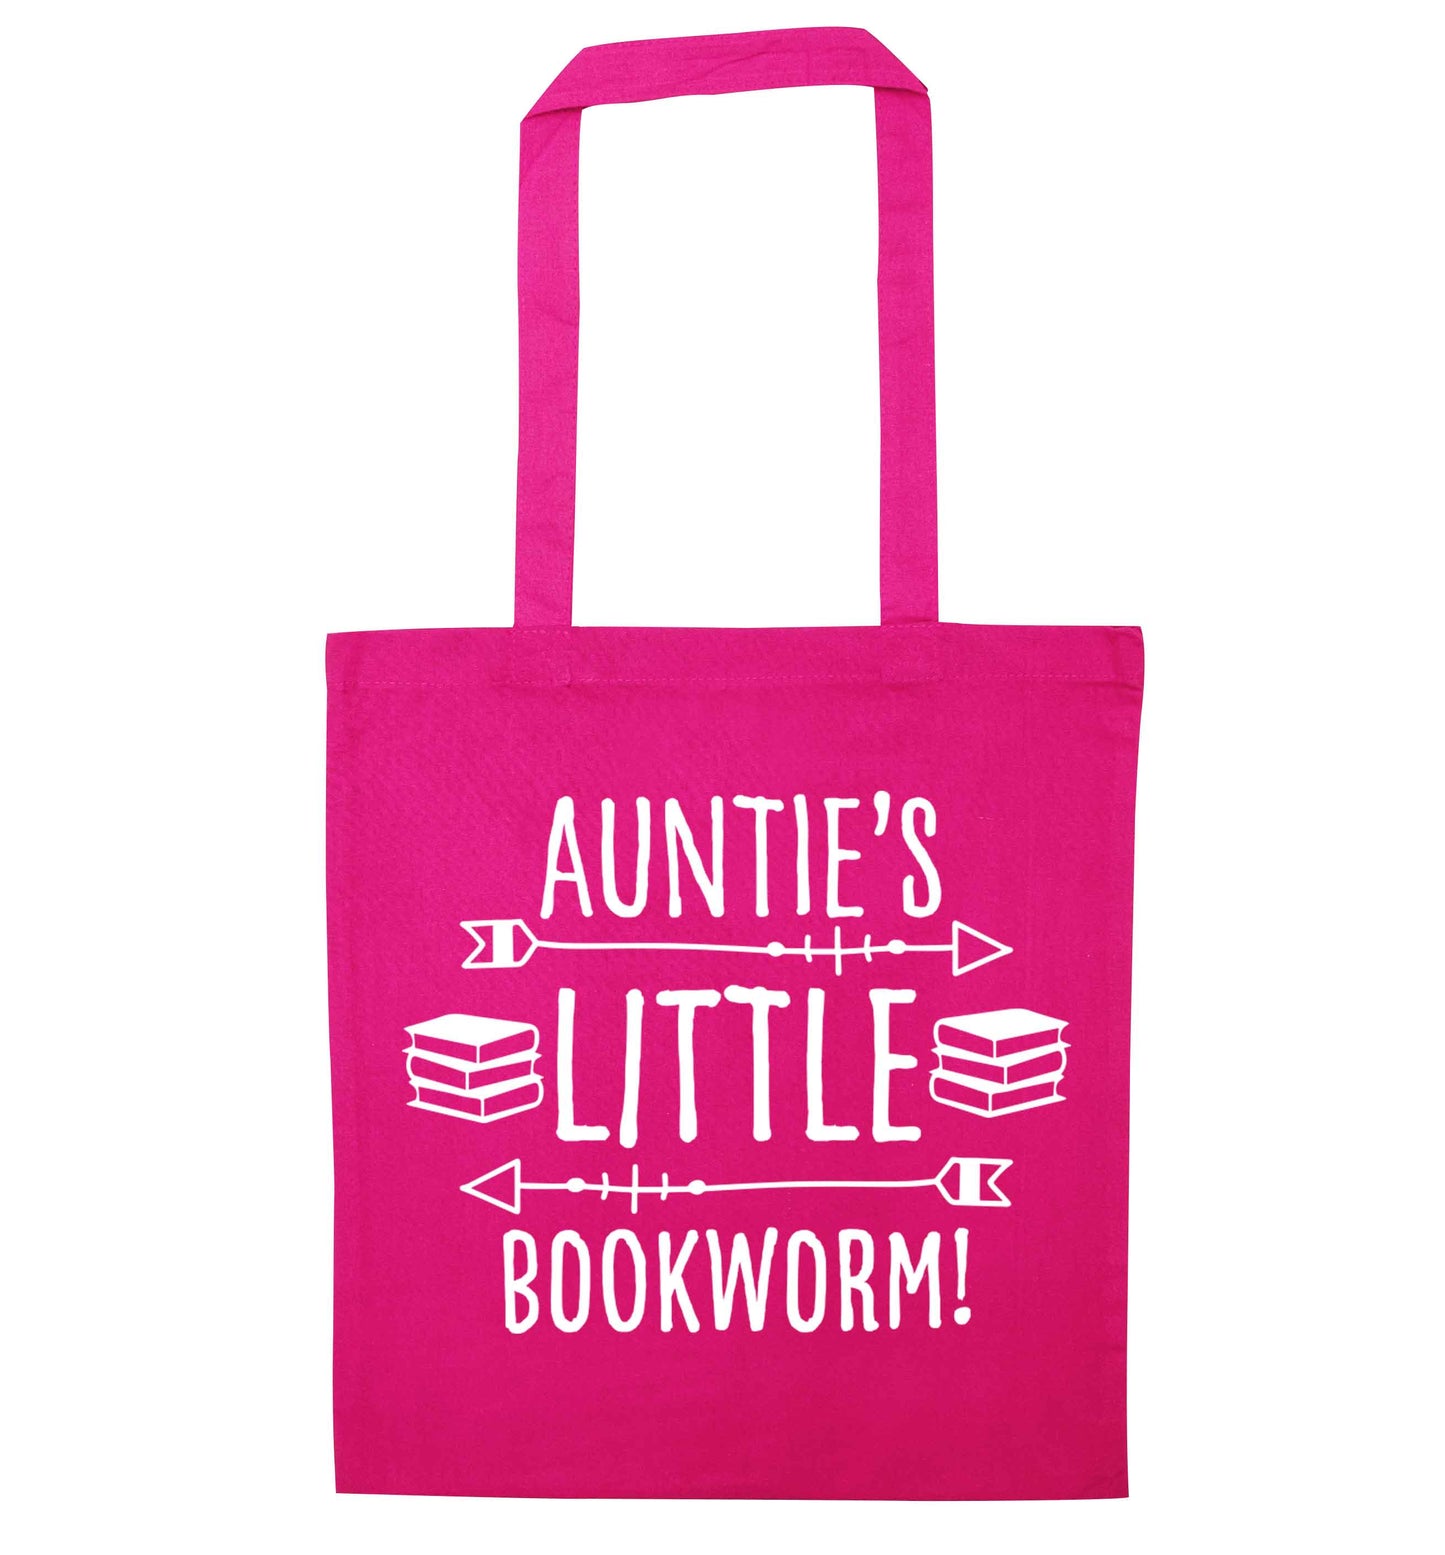 Auntie's little bookworm pink tote bag